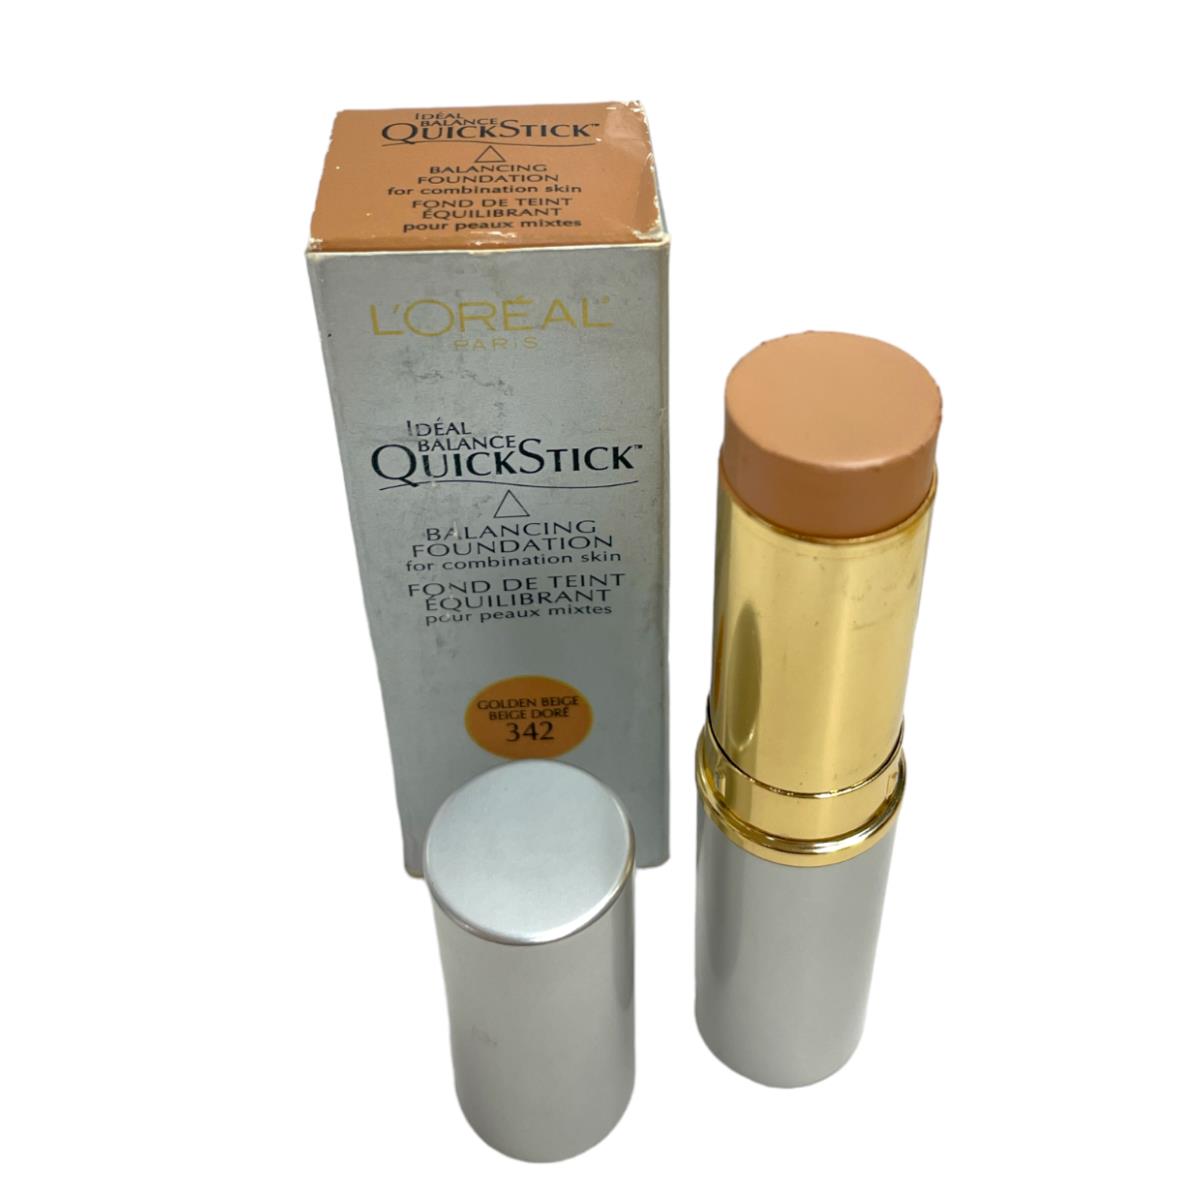 L`oreal Quick Stick Balancing Foundation Skin Spf 14 0.38oz / 11g You Pick Golden Beige 342